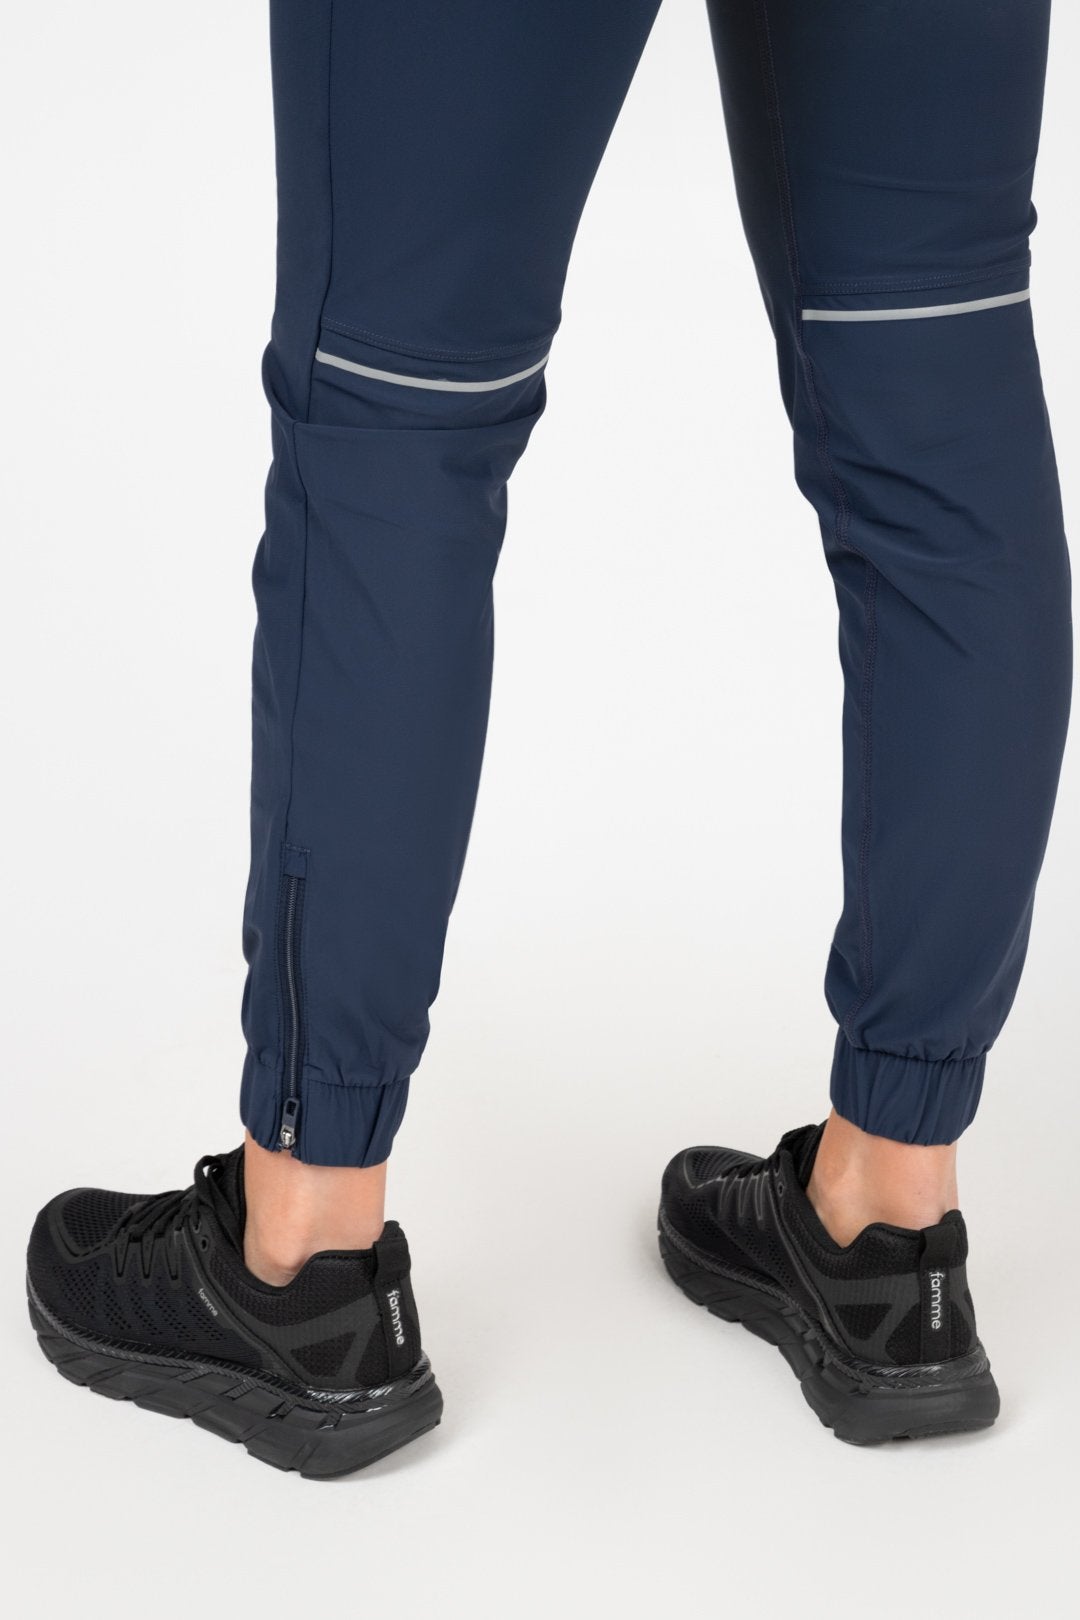 Blue Active Pants - for dame - Famme - Pants